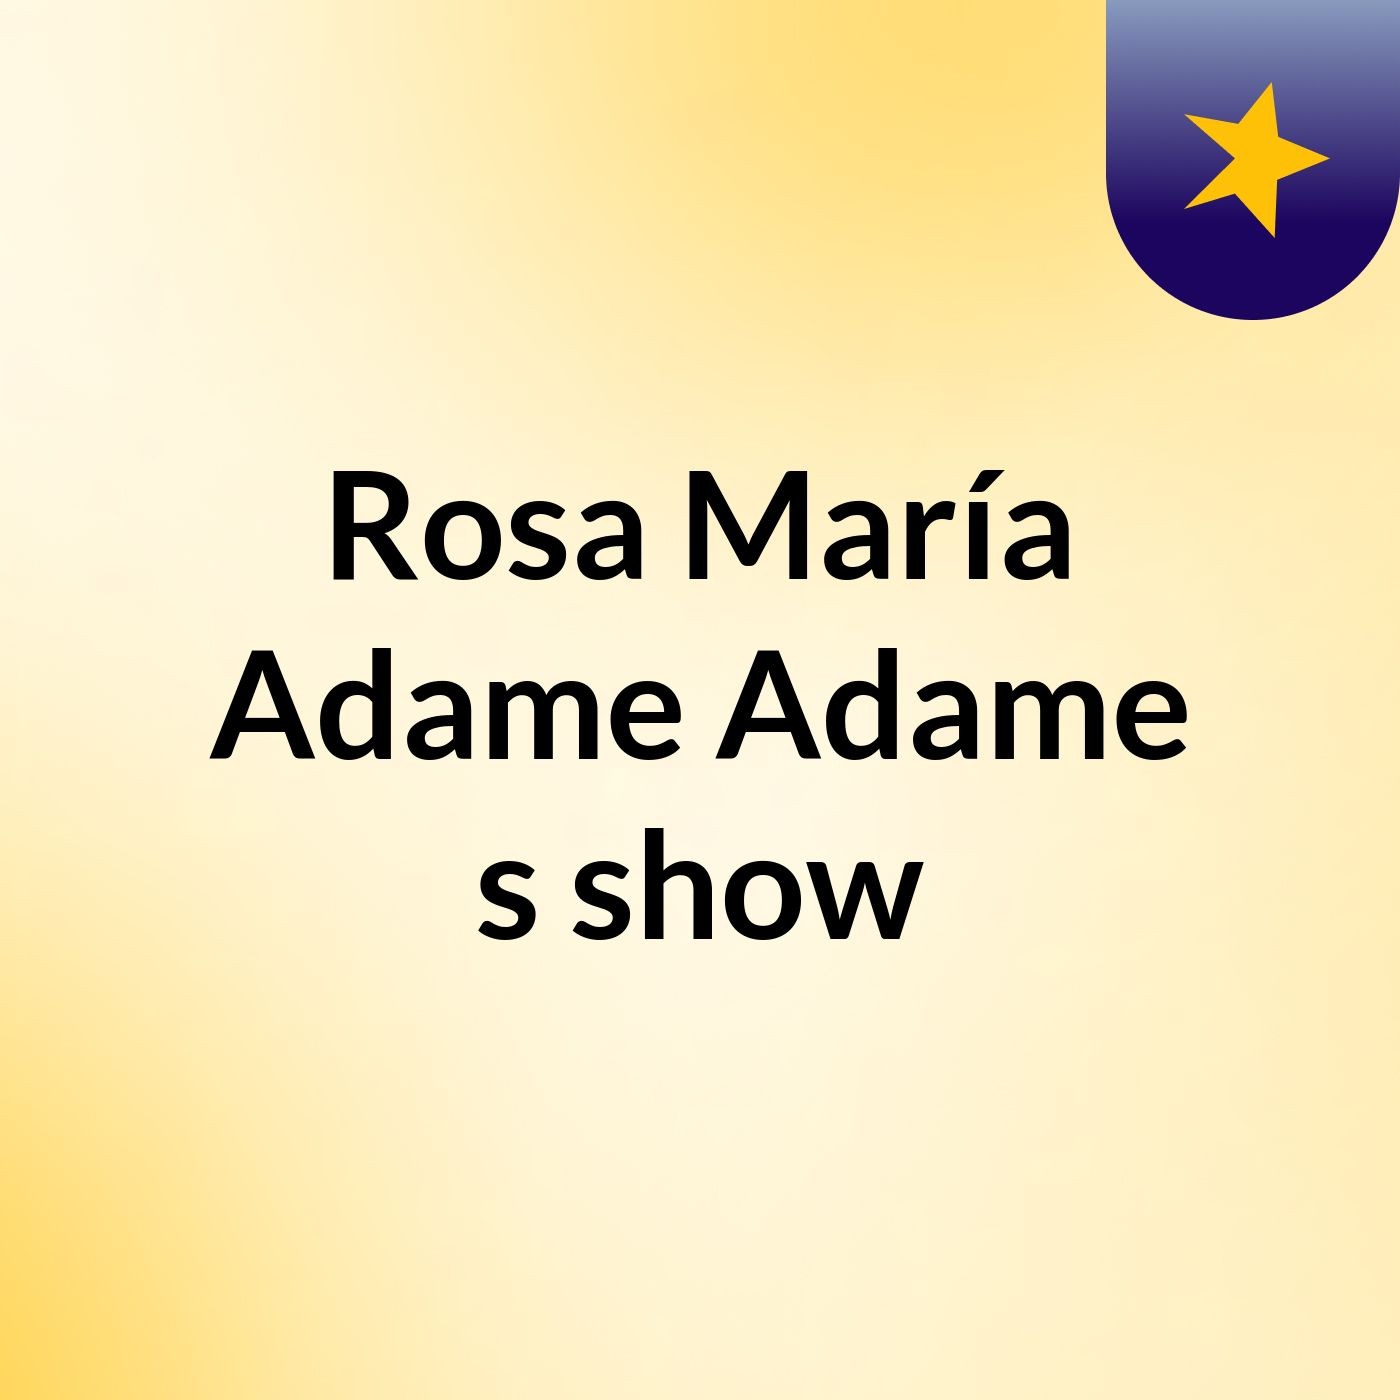 Rosa María Adame Adame's show